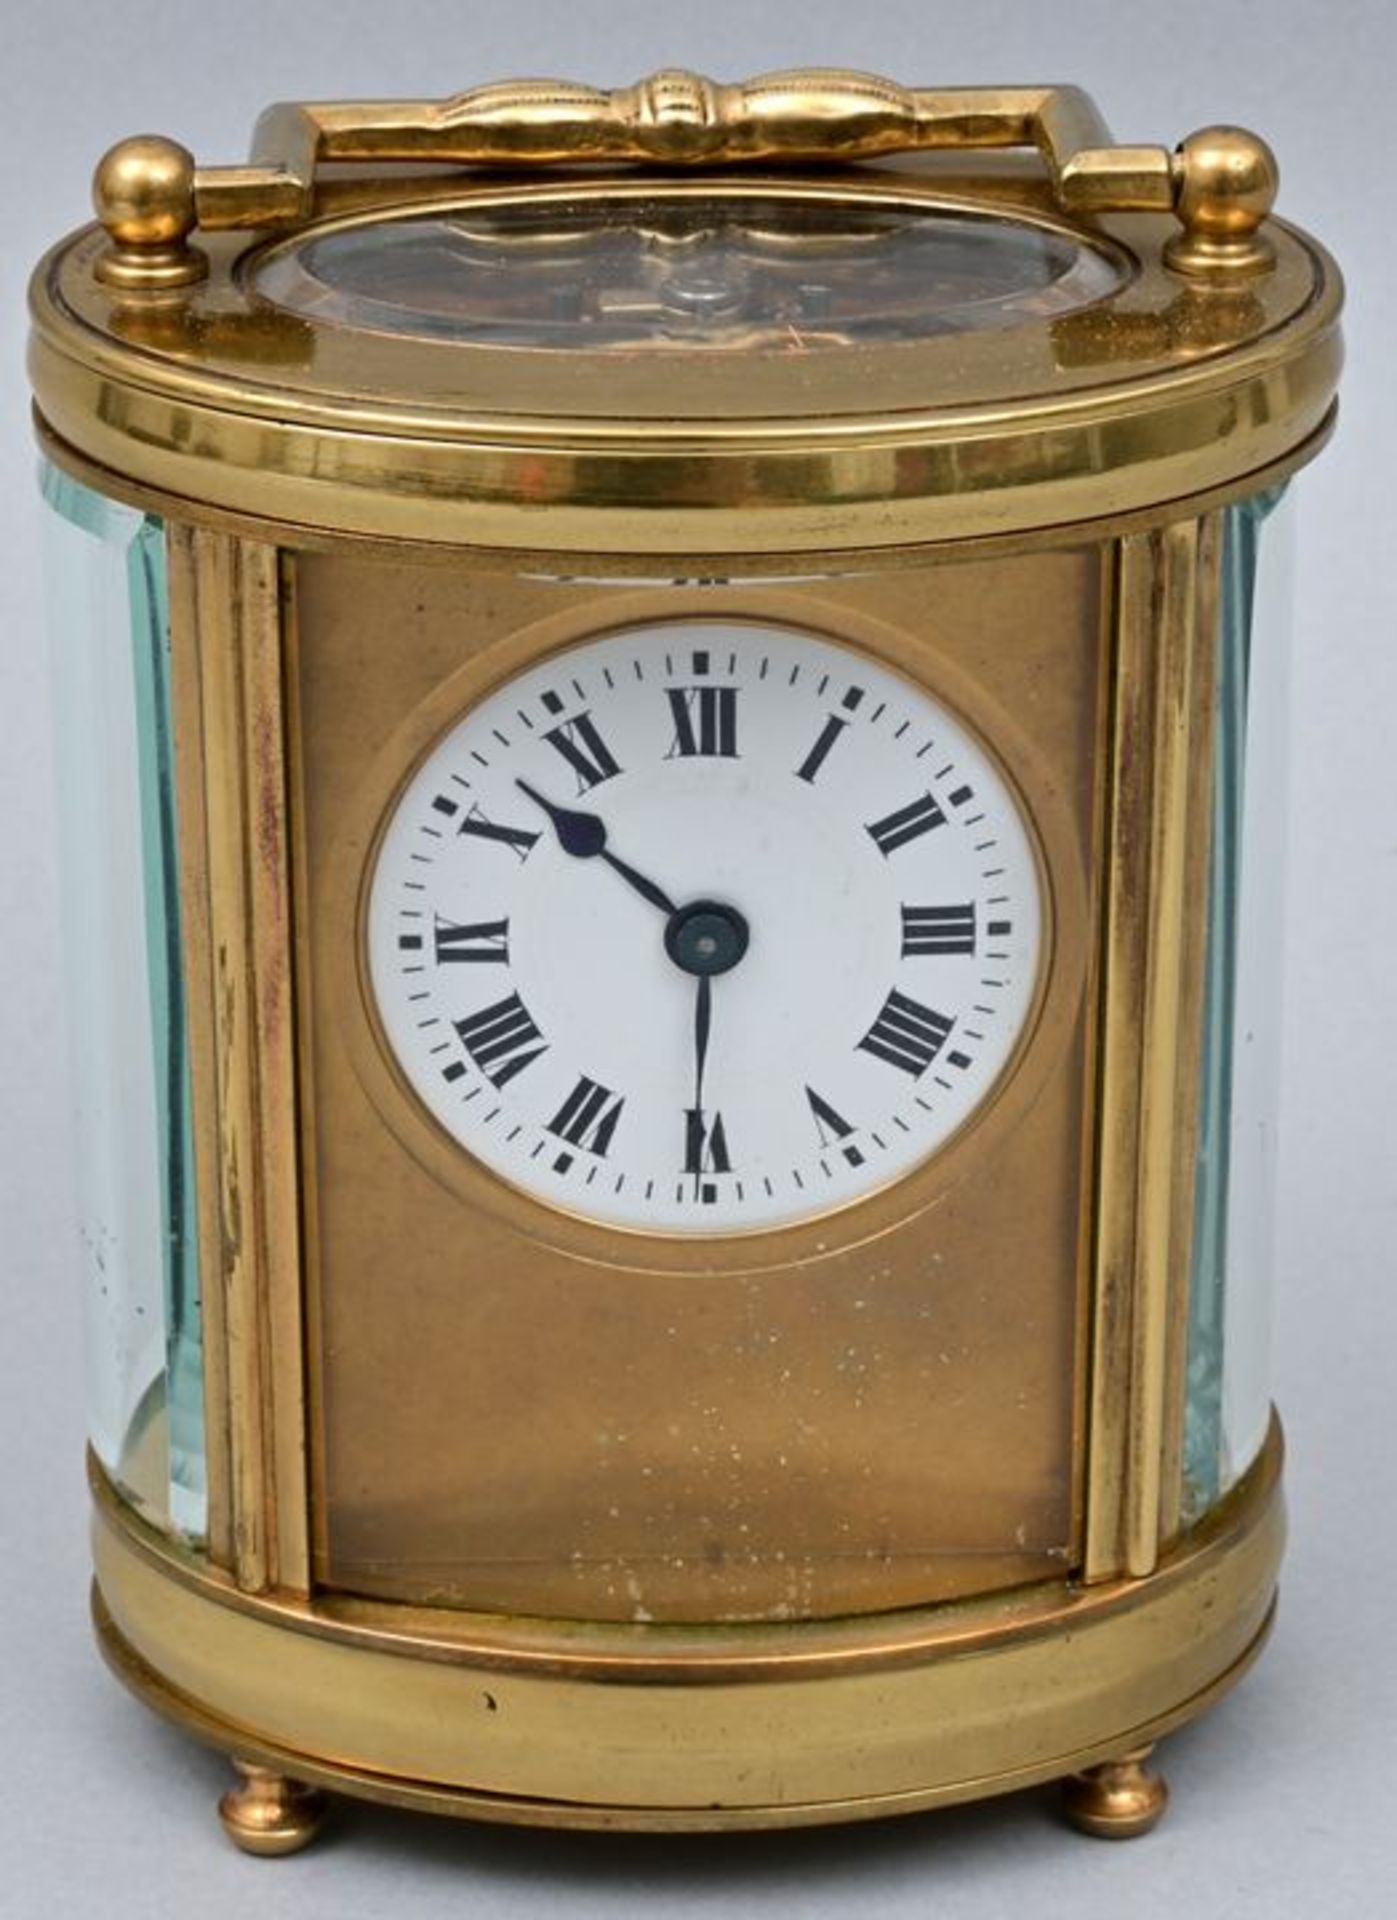 Reiseuhr, Marke Löwe / Travel clock